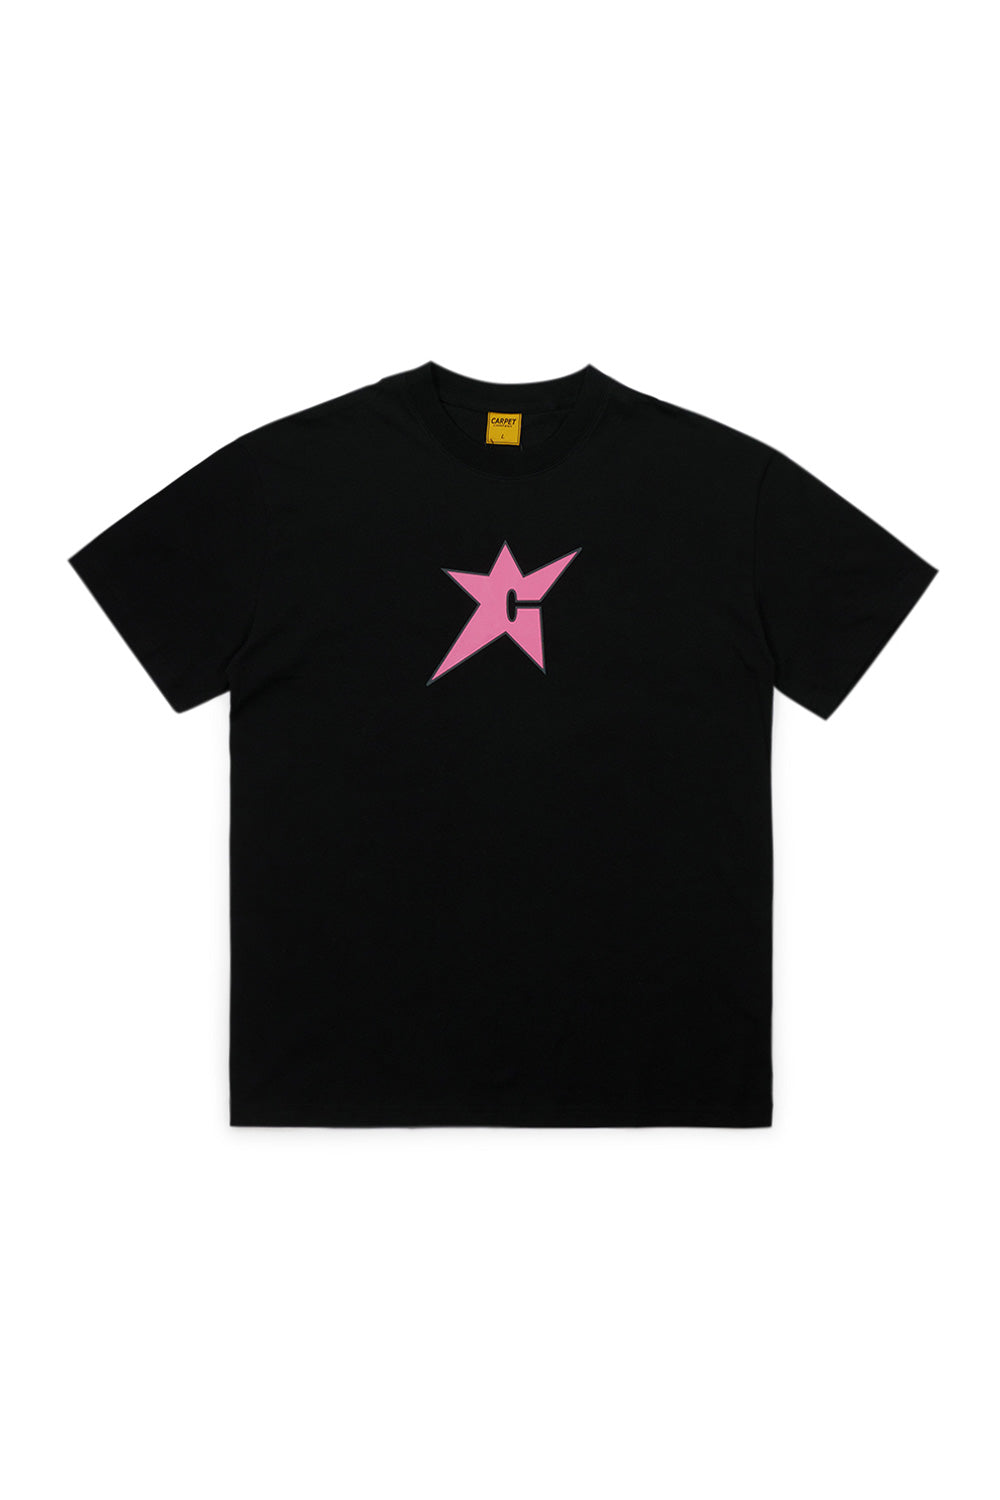 Carpet Company C-Star T-Shirt Black (Pink Print) - BONKERS